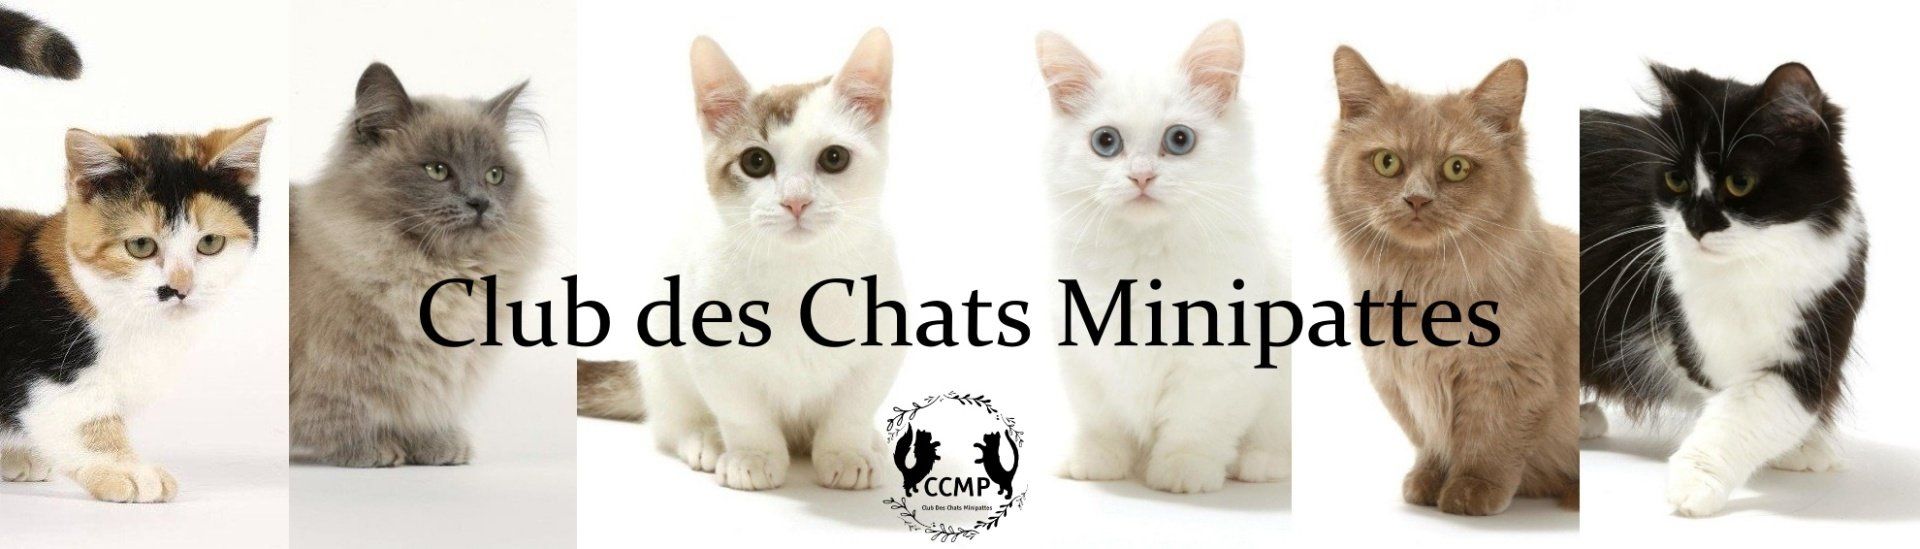 Club Des Chats Minipattes